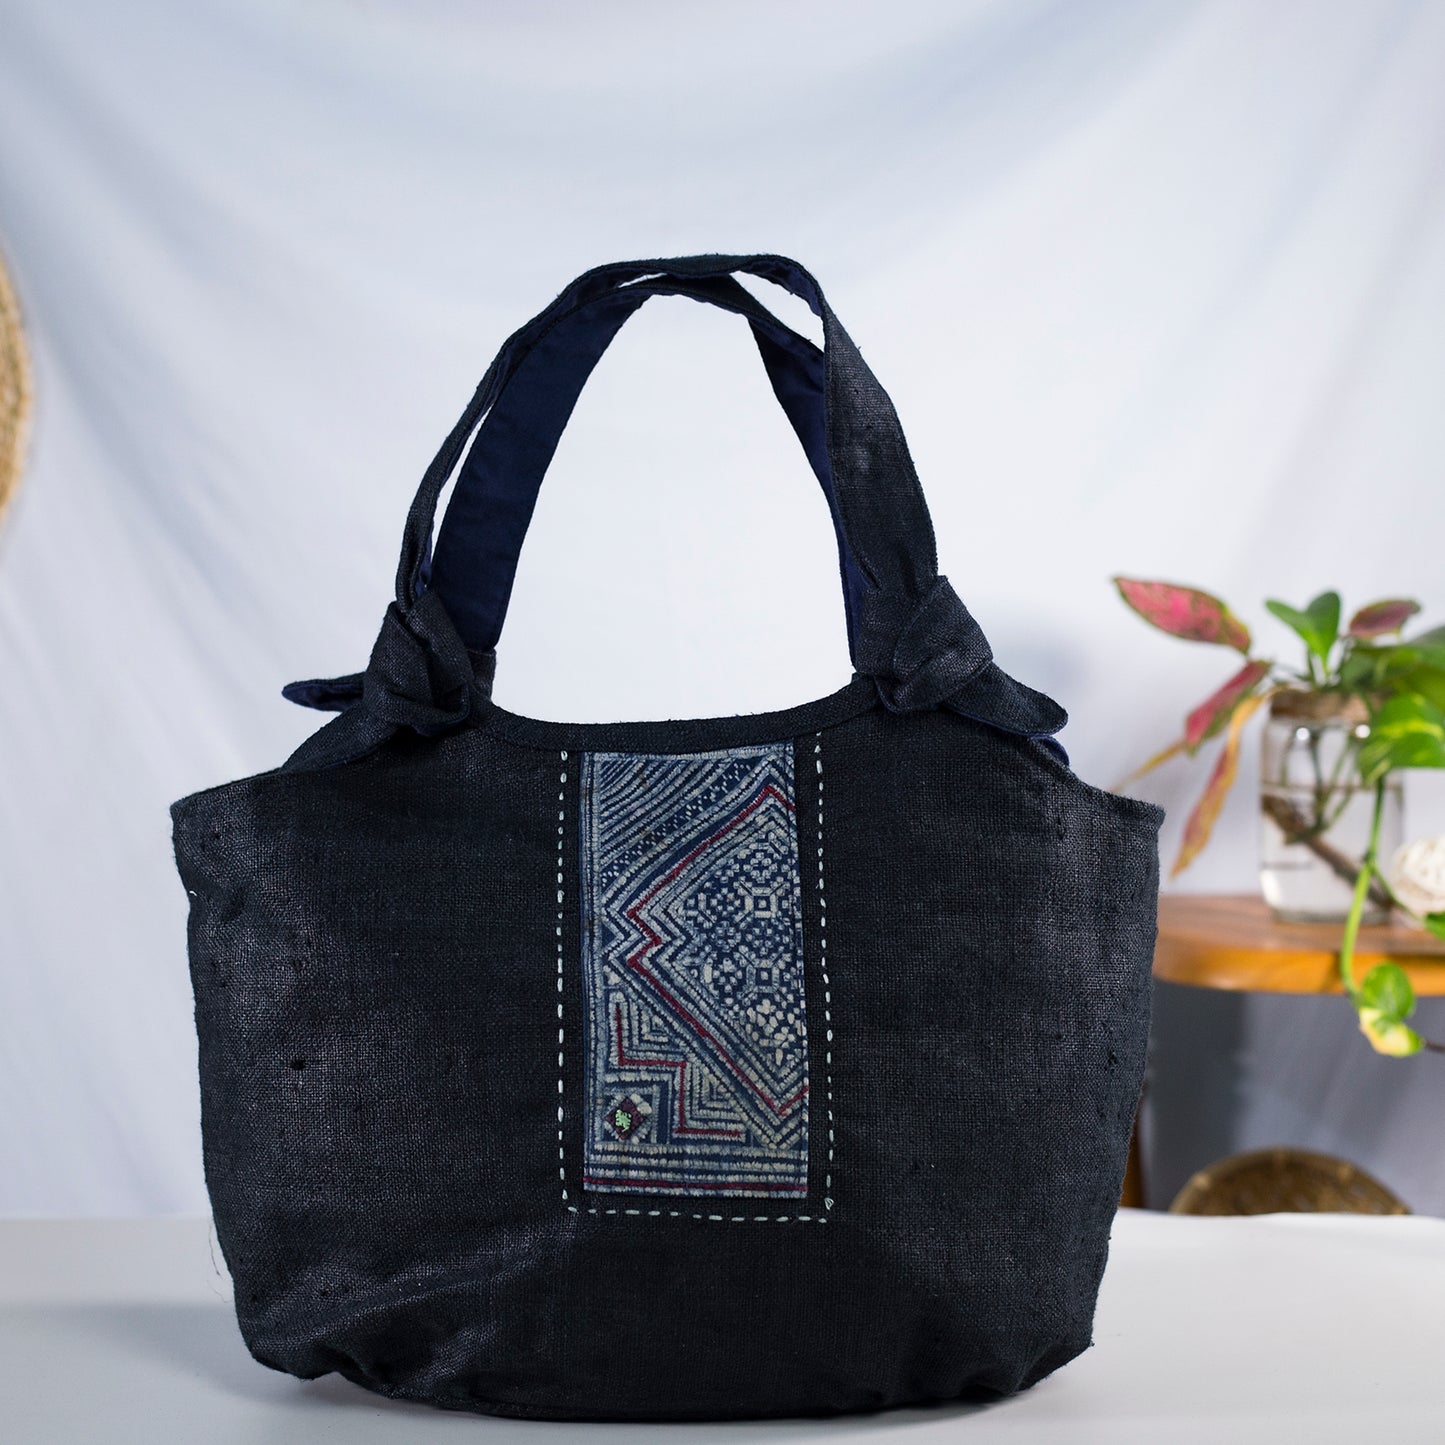 Bunny ear handbag, natural hemp in BLACK with vintage patch